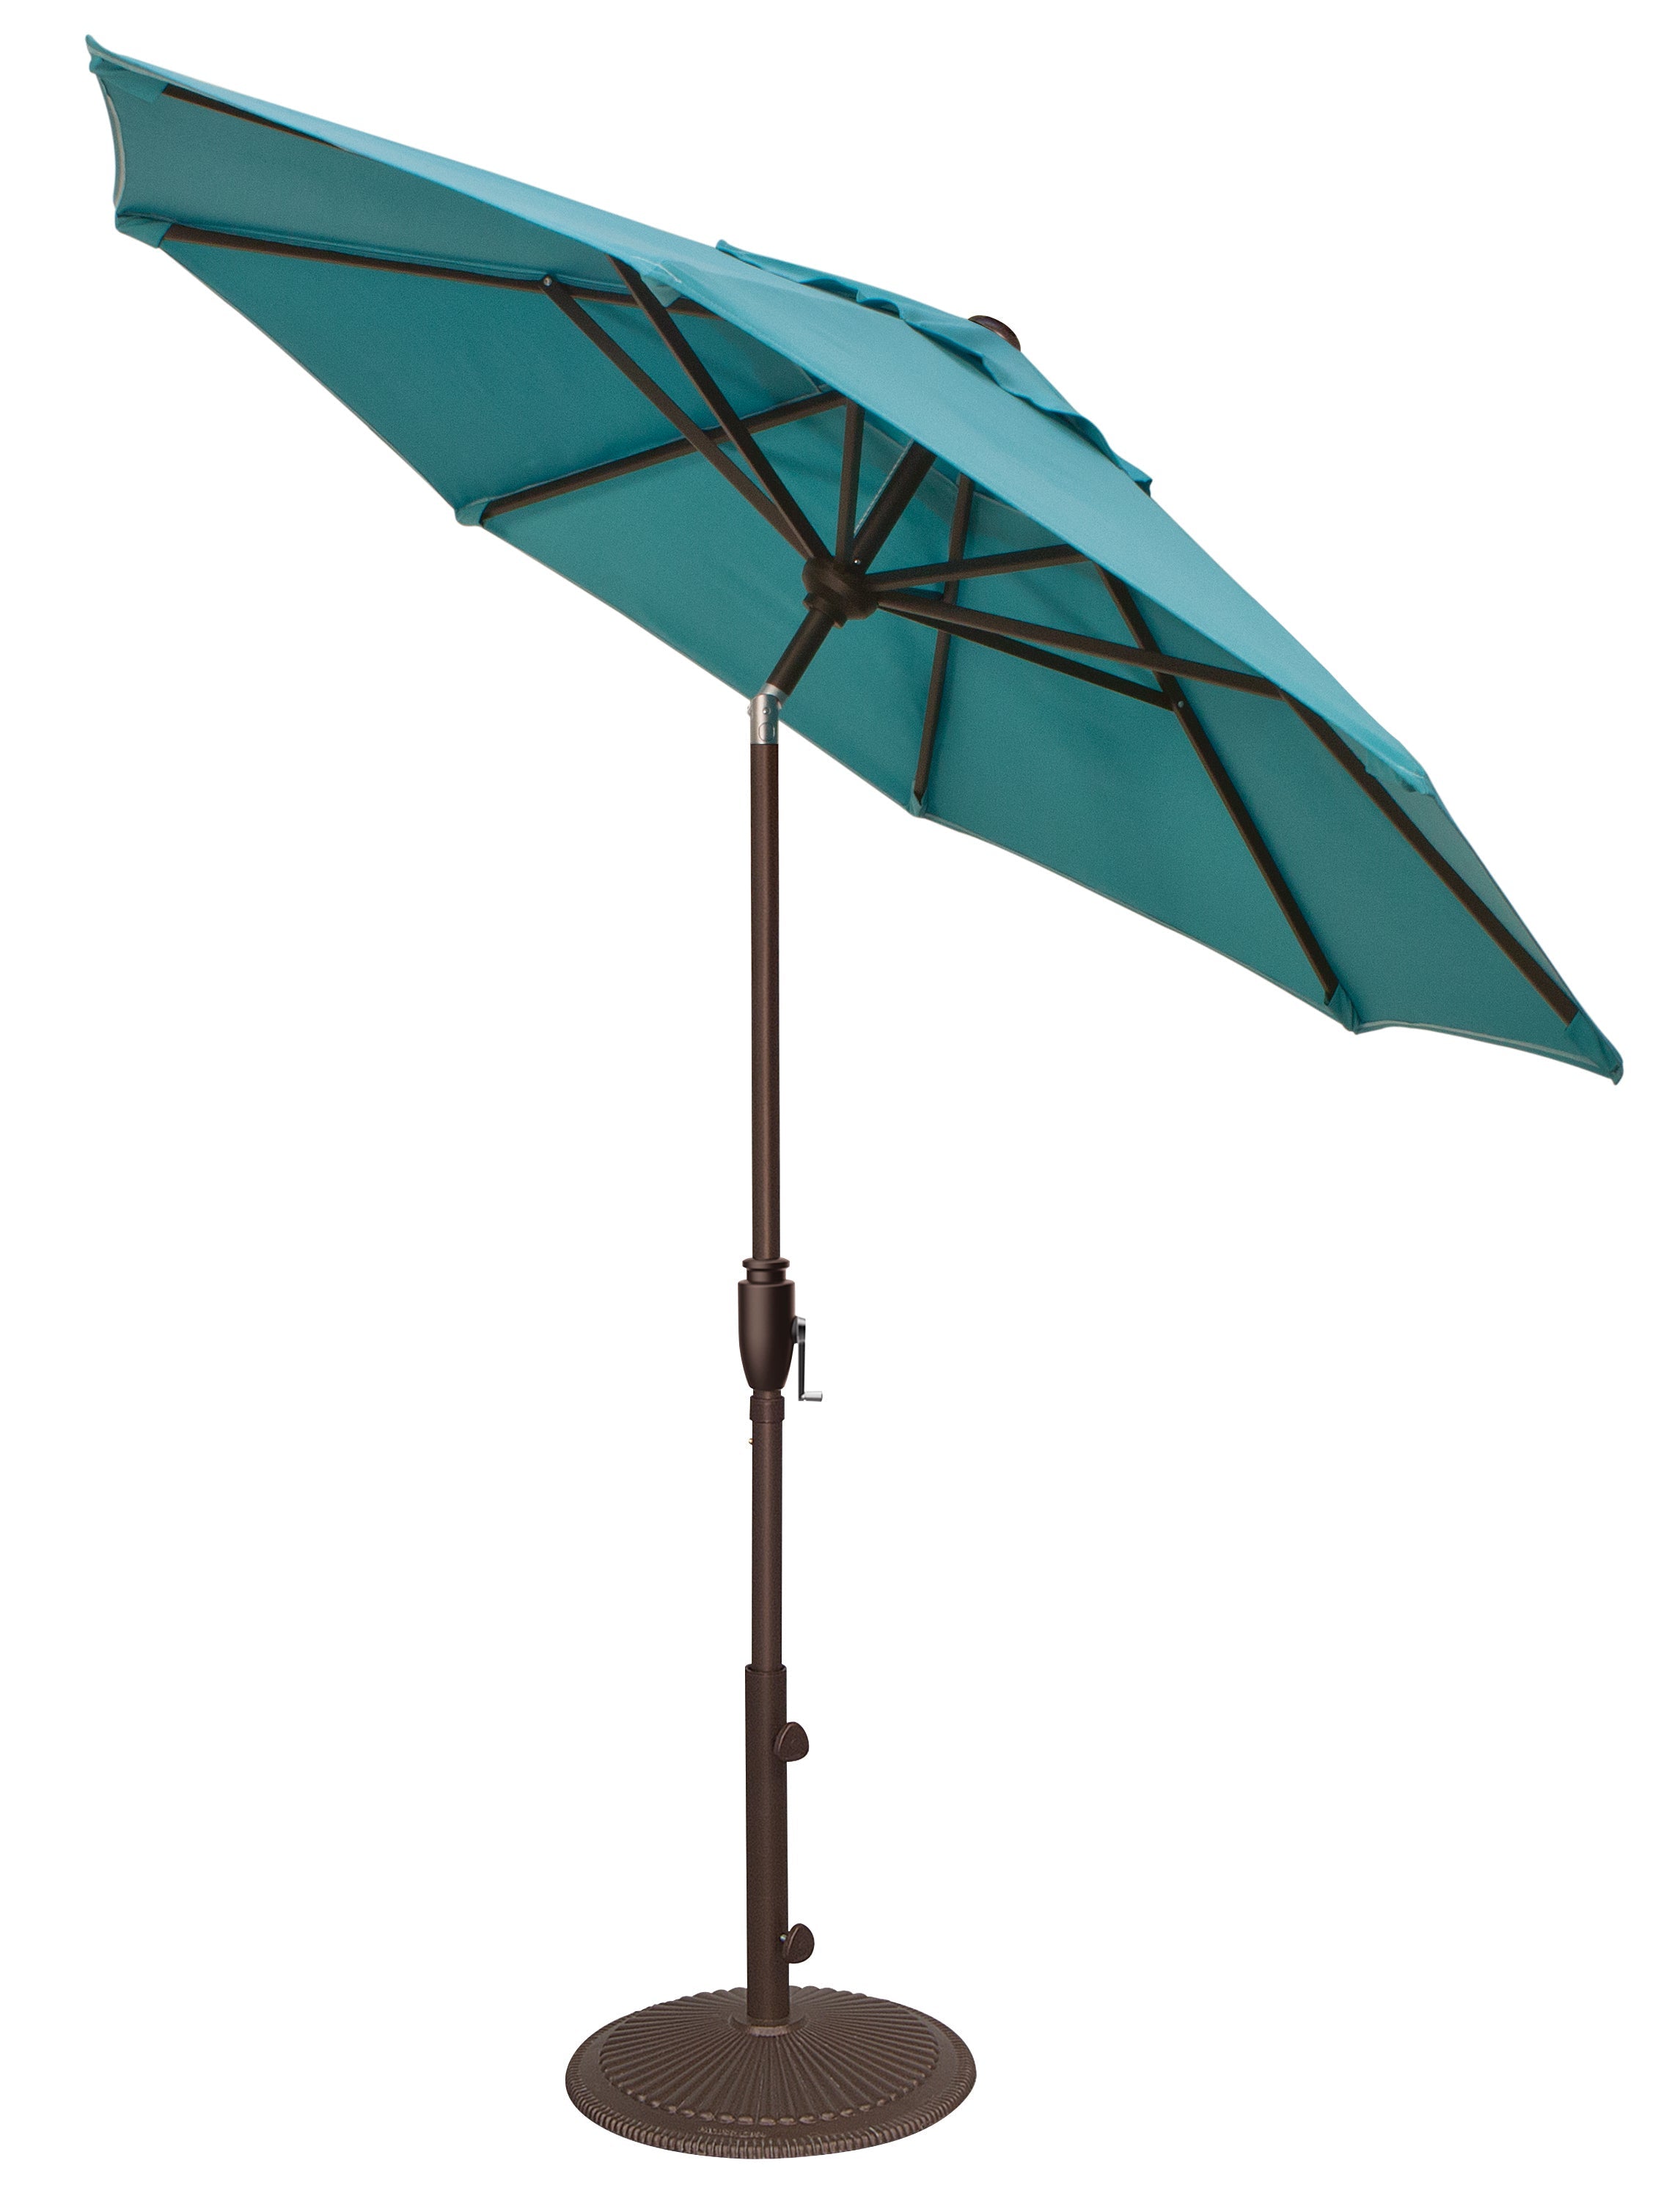 7.5' GLIDE TILT Market Umbrella by Treasure Garden